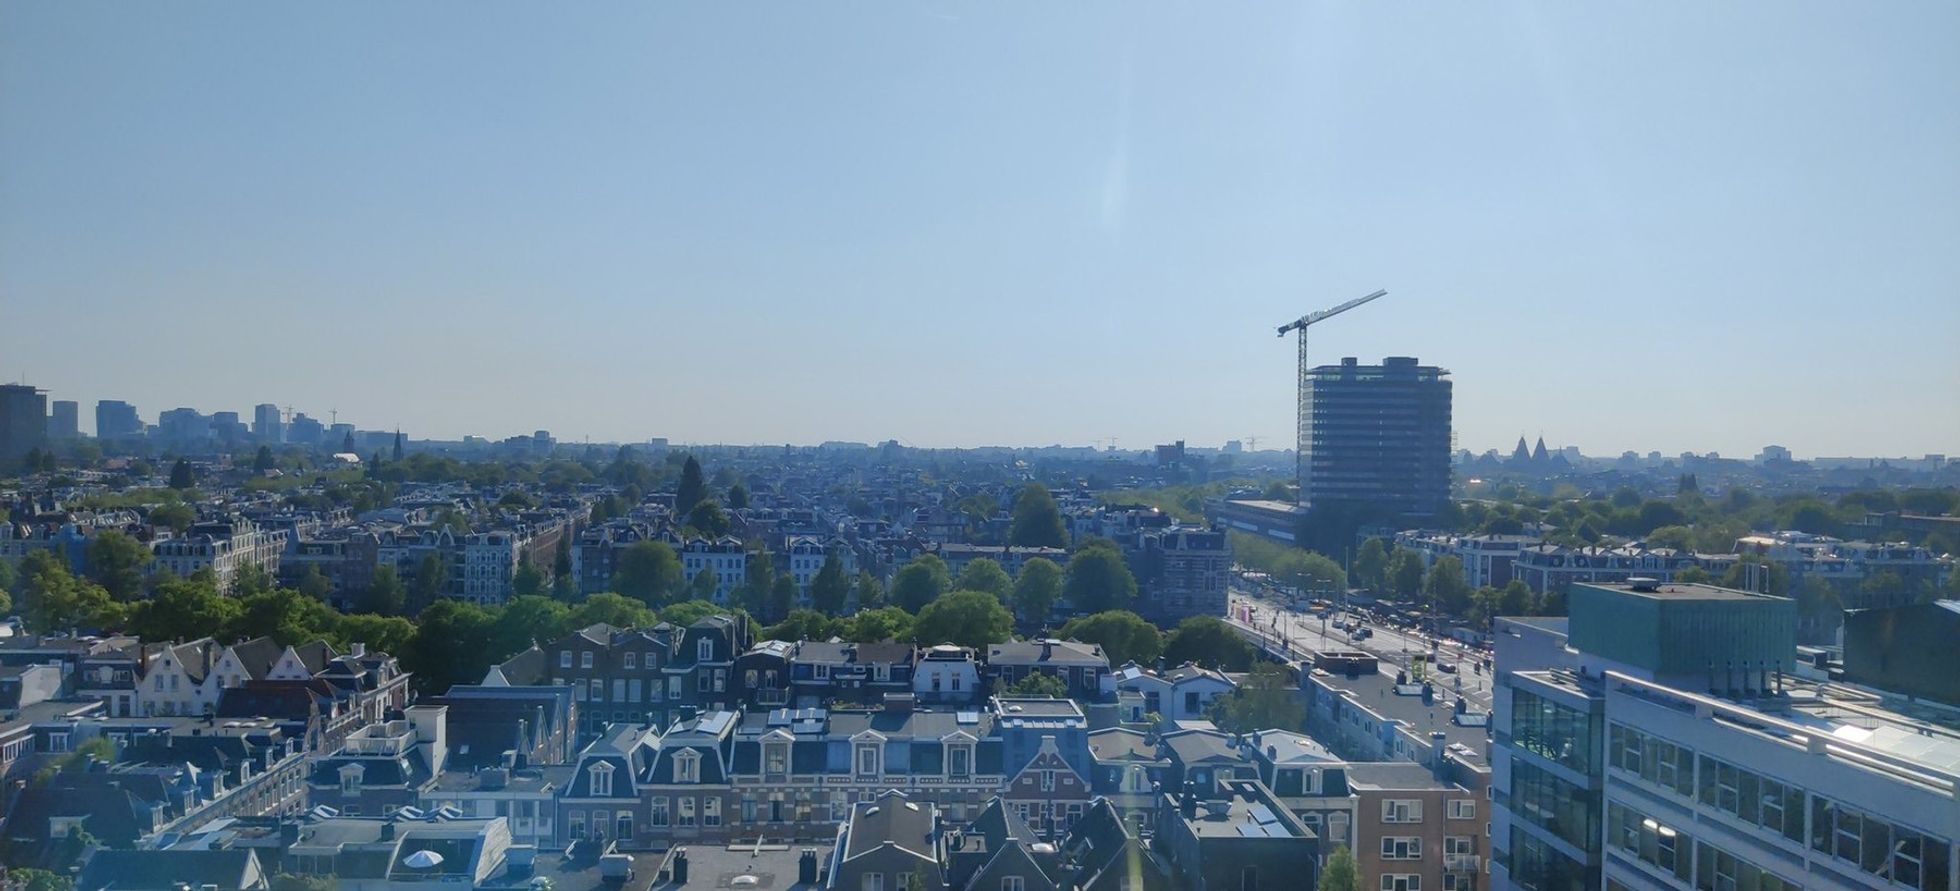 Amsterdam skyline view from Kohnstammhuis